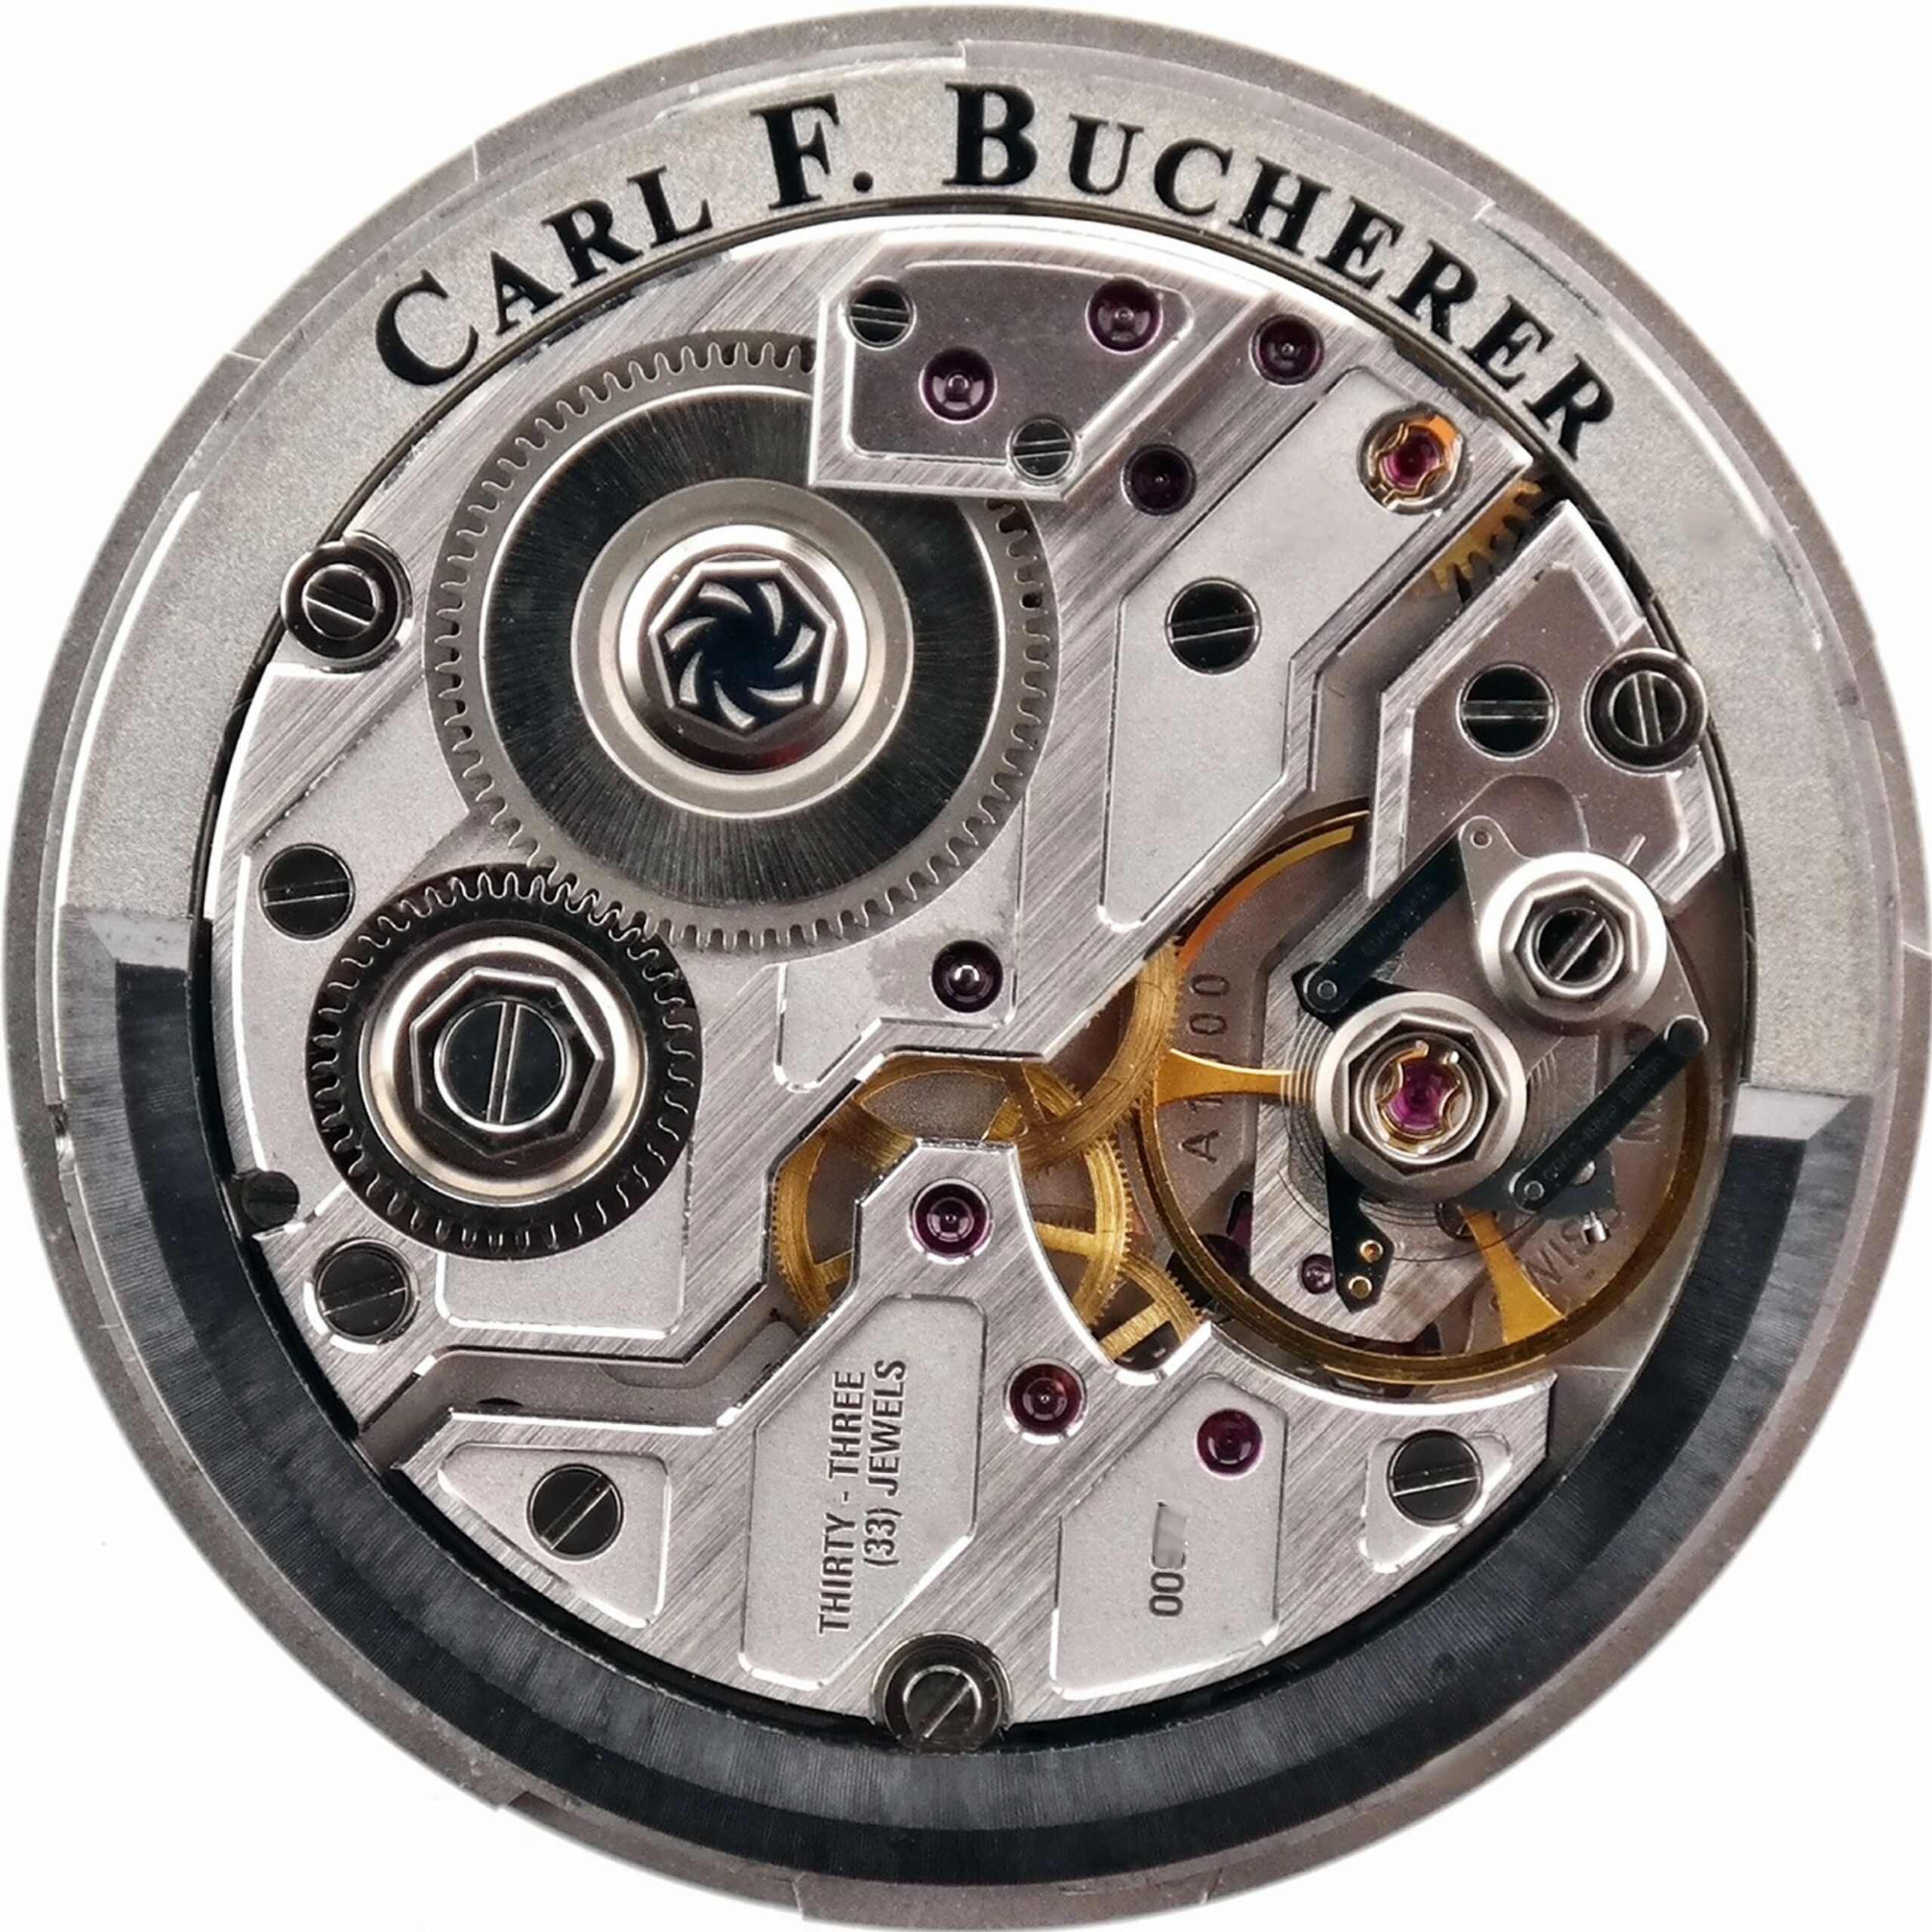 CARL F. BUCHERER - Calibre A1000/1001 - Swiss Made Automatic Watch Movement